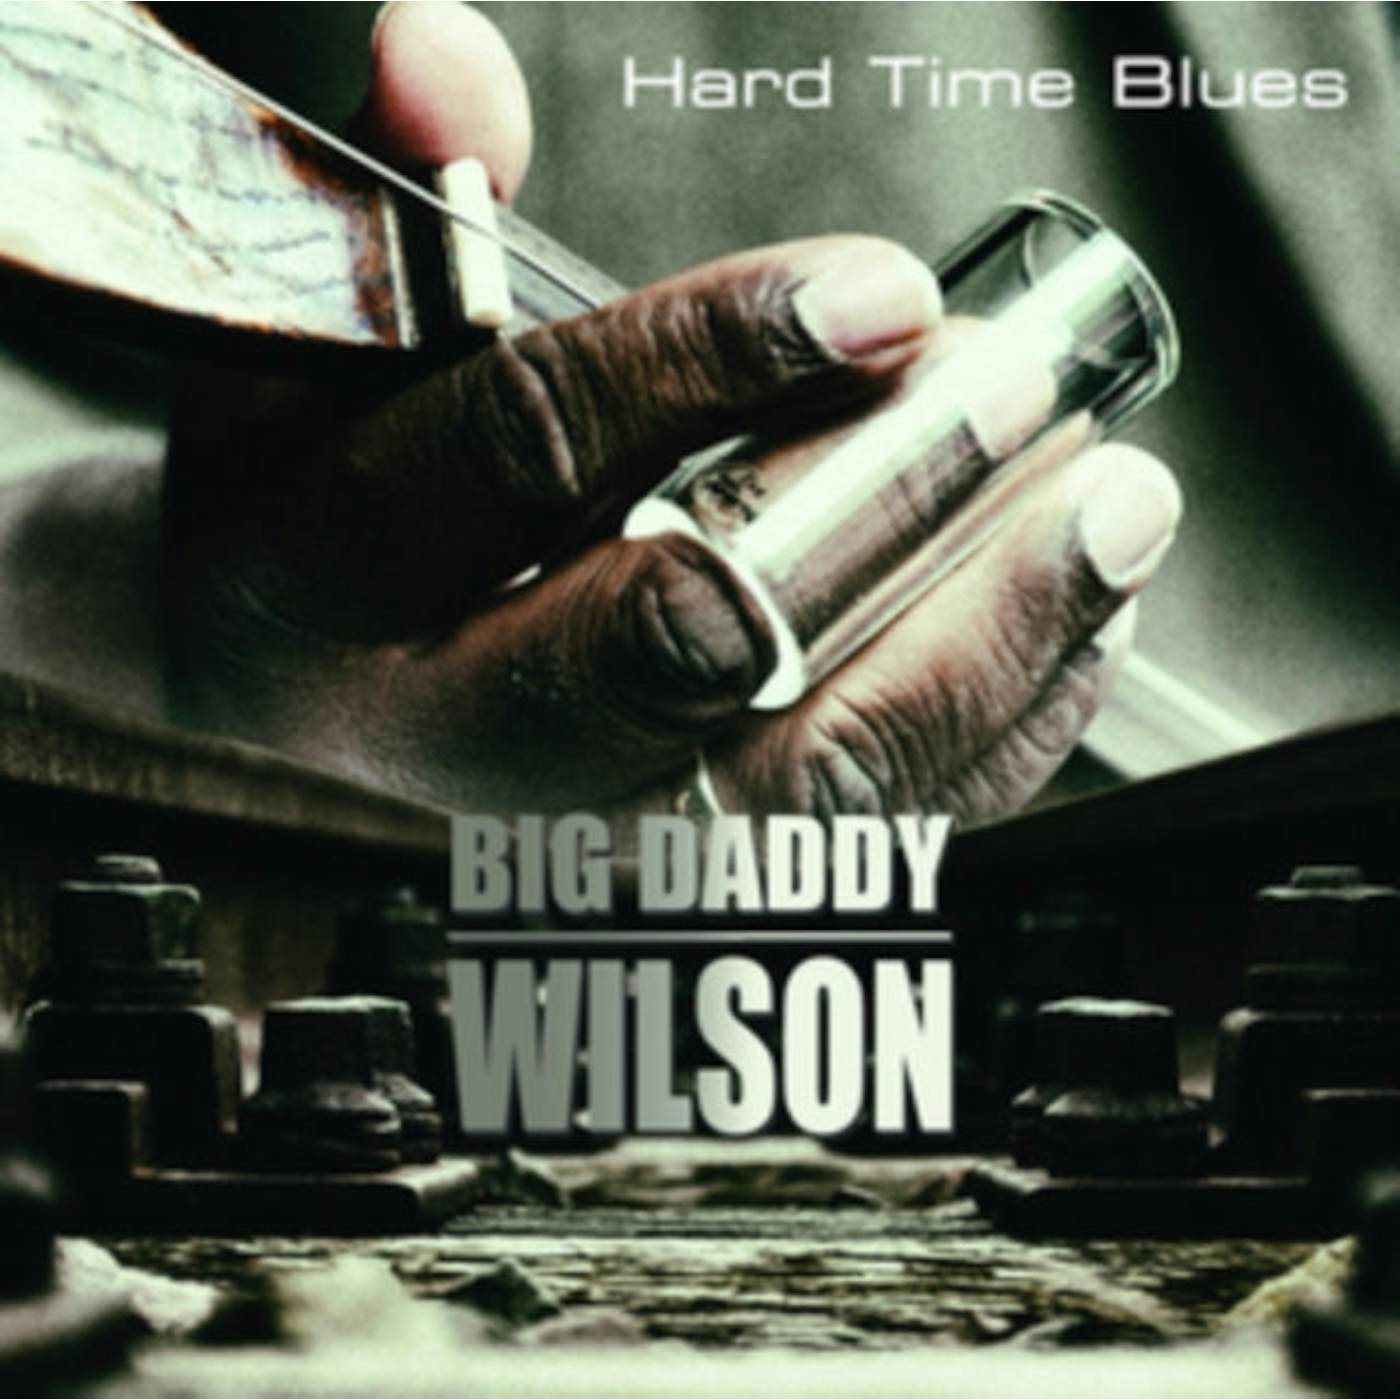 Big Daddy Wilson LP Vinyl Record - Hard Time Blues